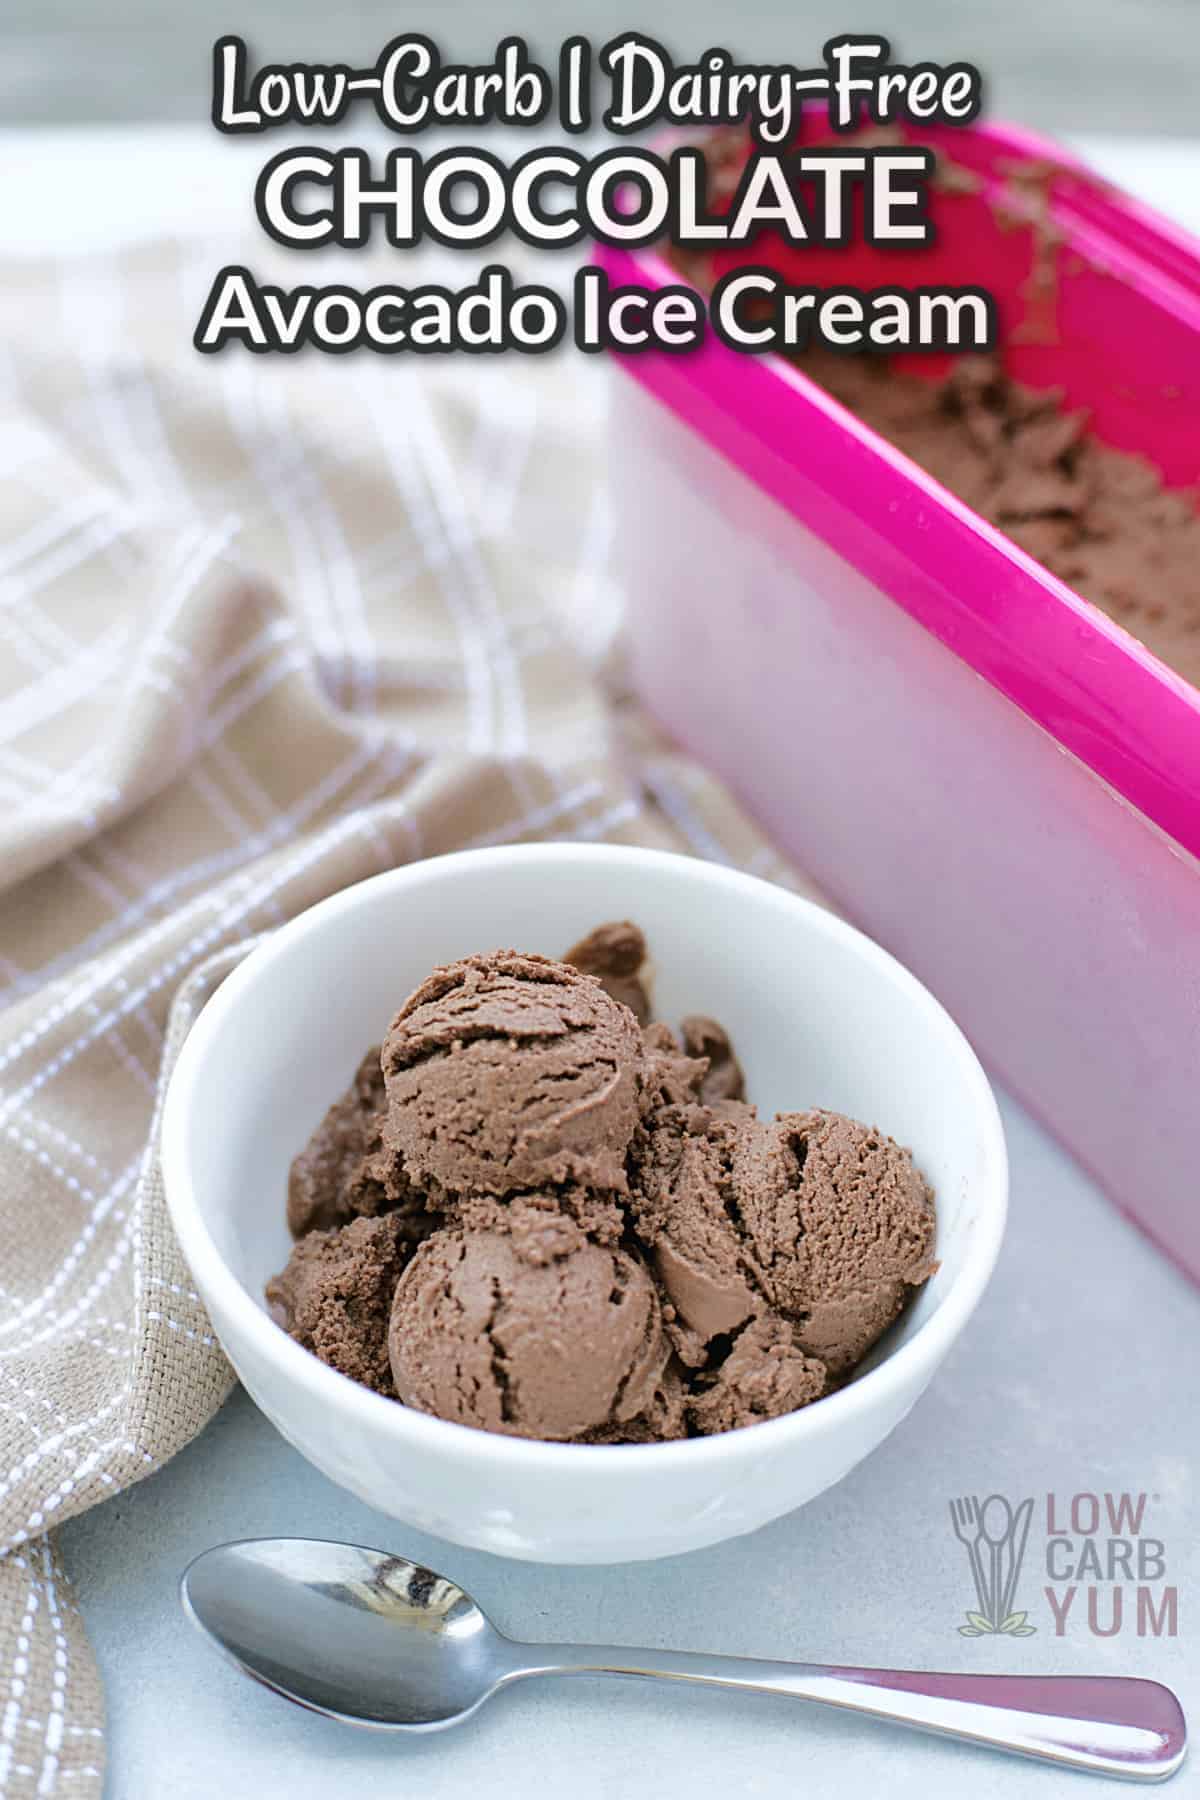 chocolate avocado ice cream with text overlay.